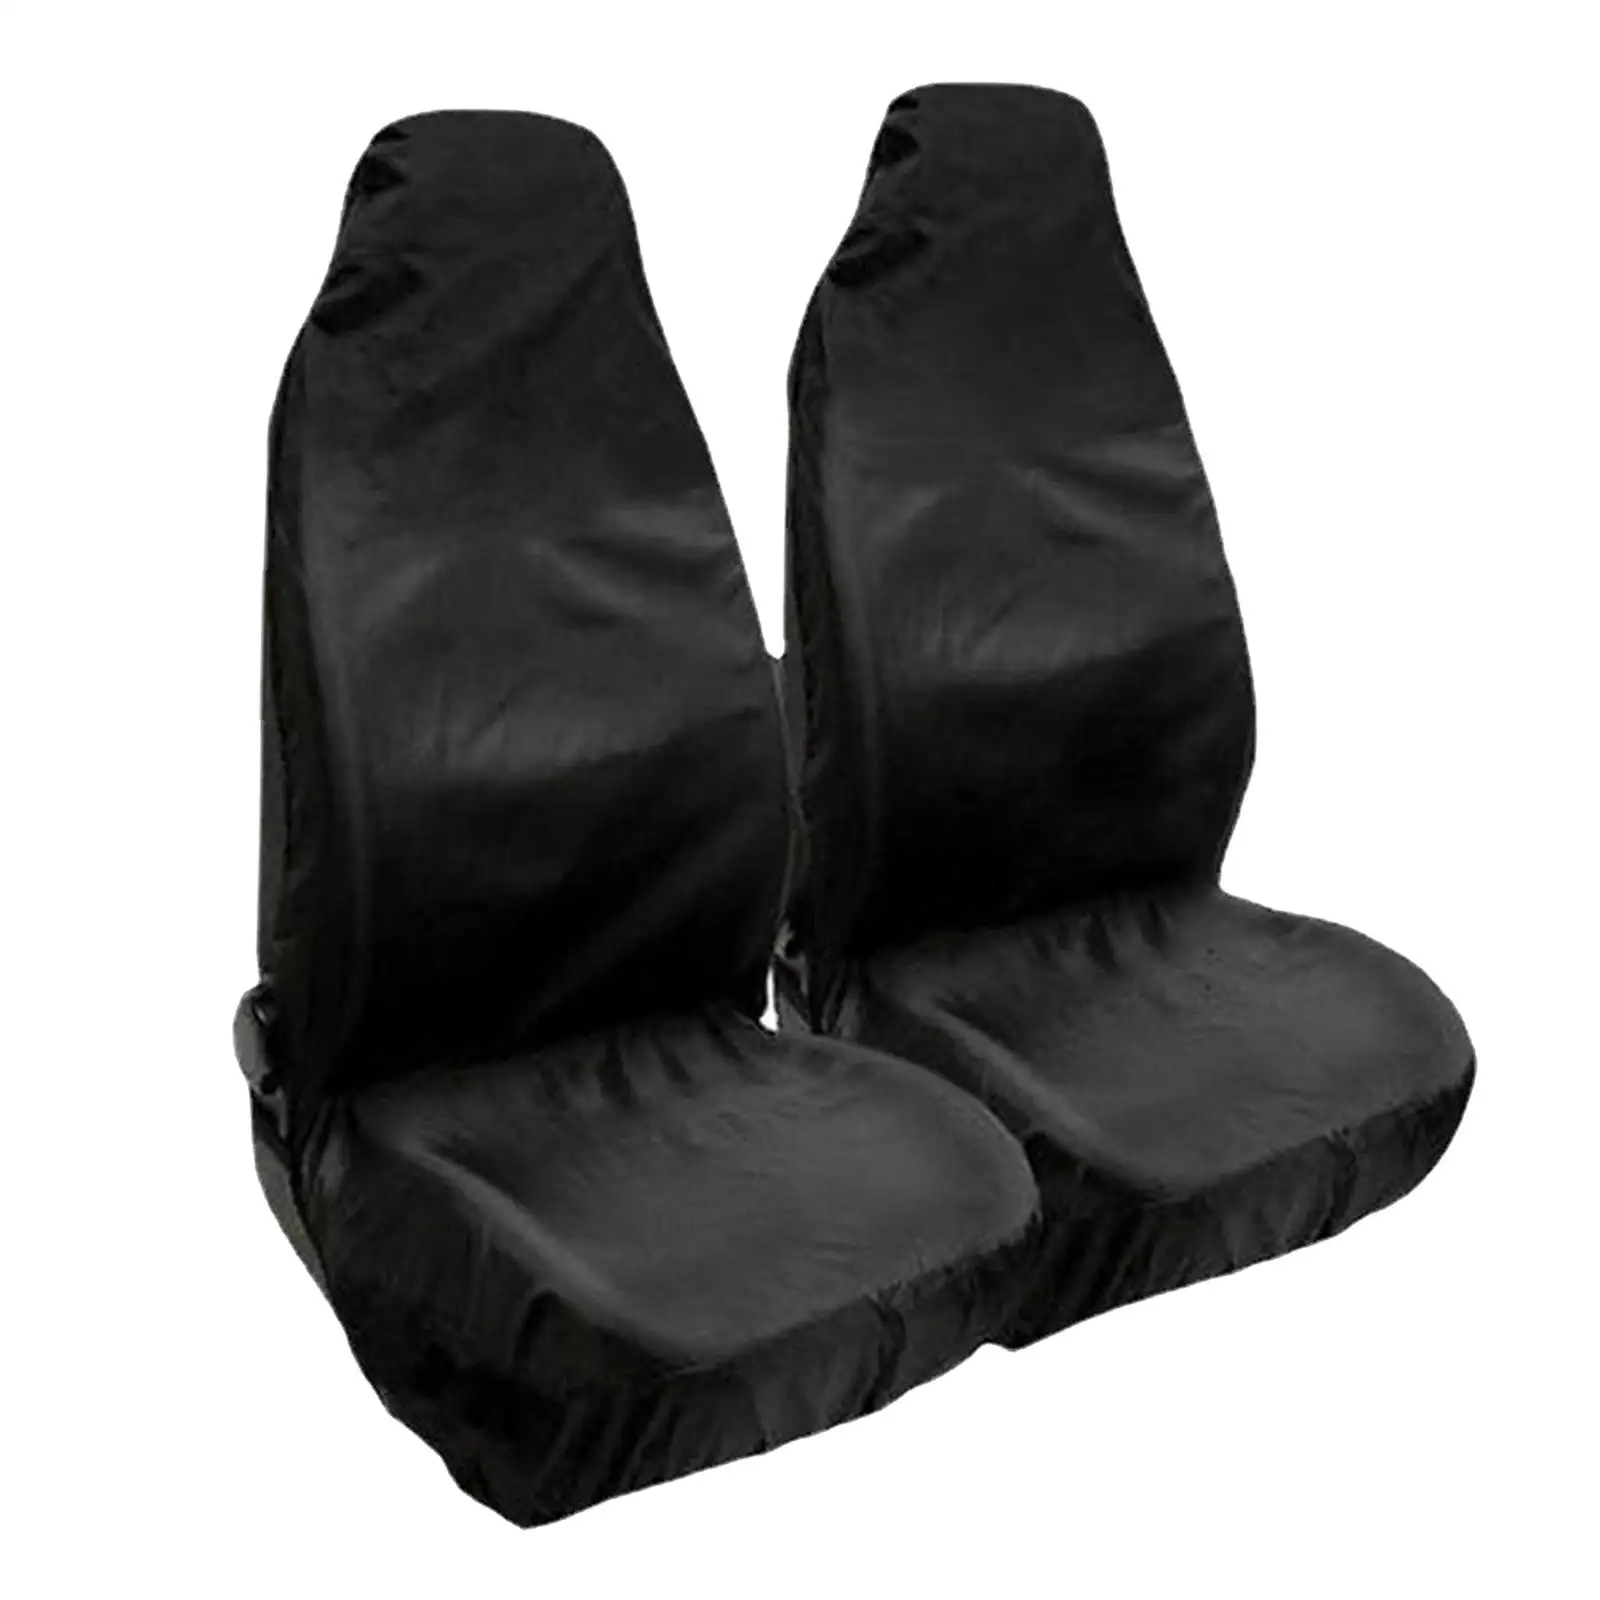 2x אוטומטי כיסוי מושב סט כרית מושב מכסים עם שקית אחסון Dustproof קל להגנה כיסוי מושב מגן עבור רכב שטח - 0